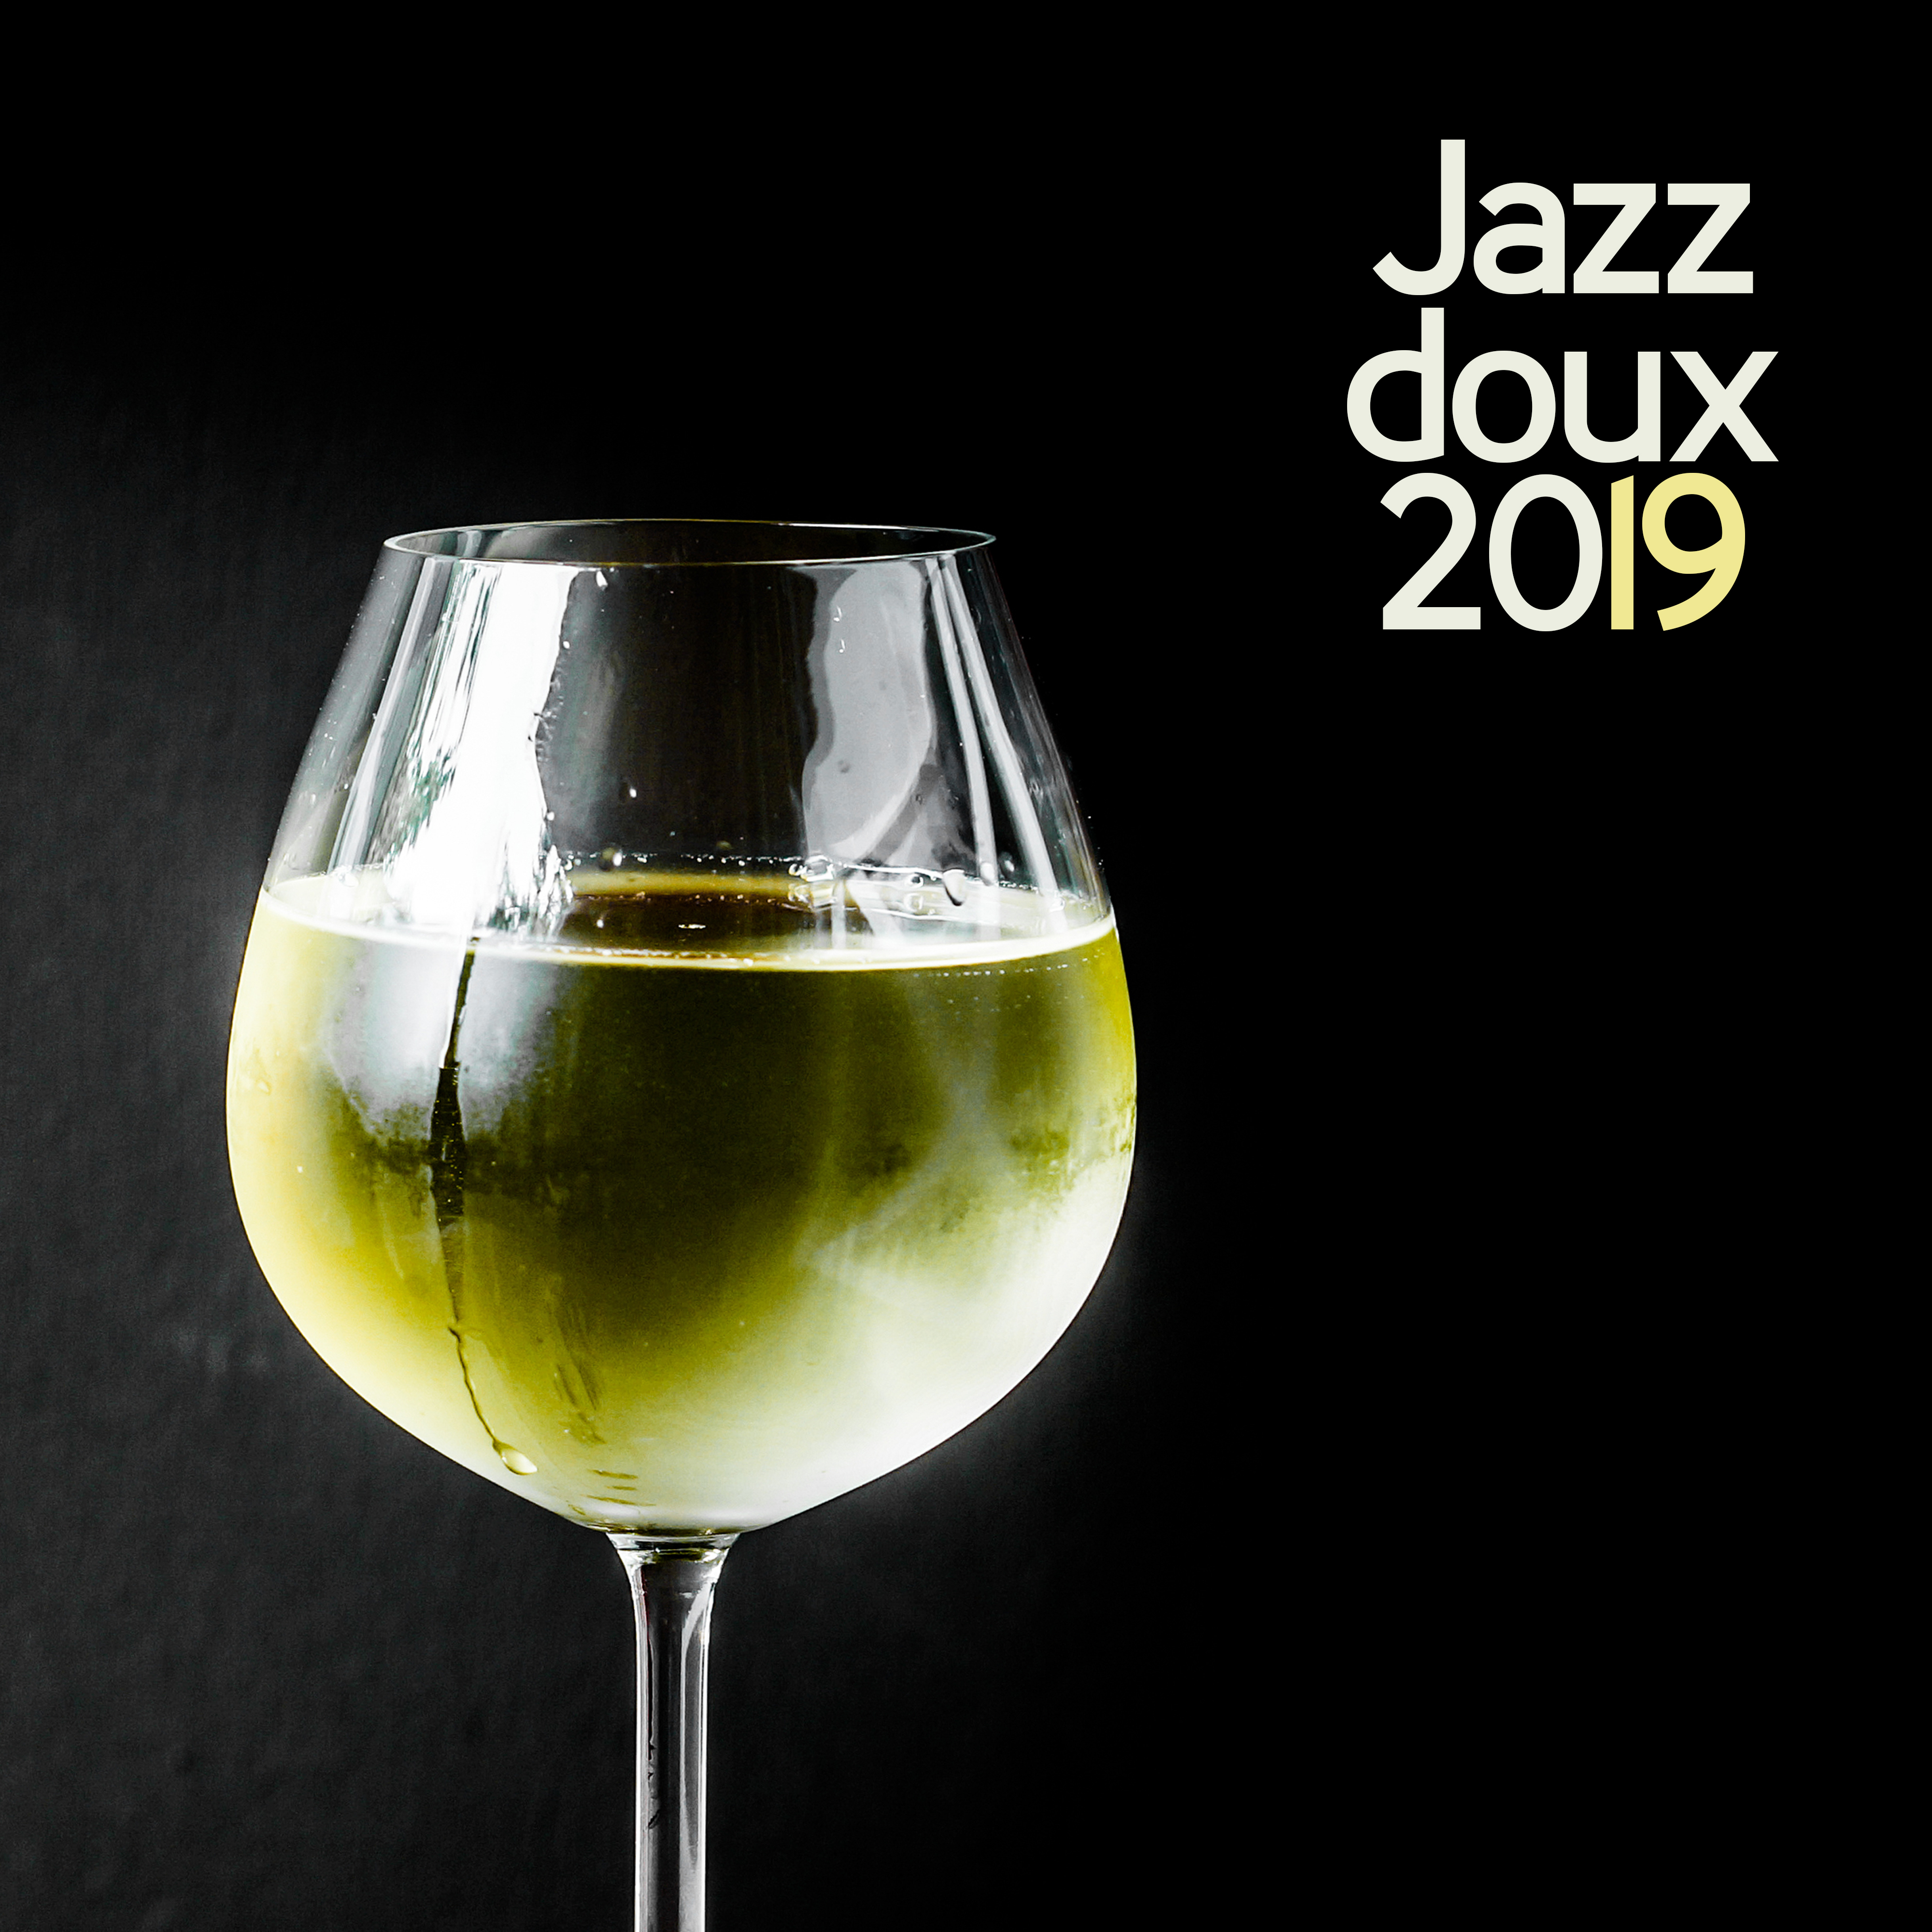 Jazz doux 2019 – Musique relaxante